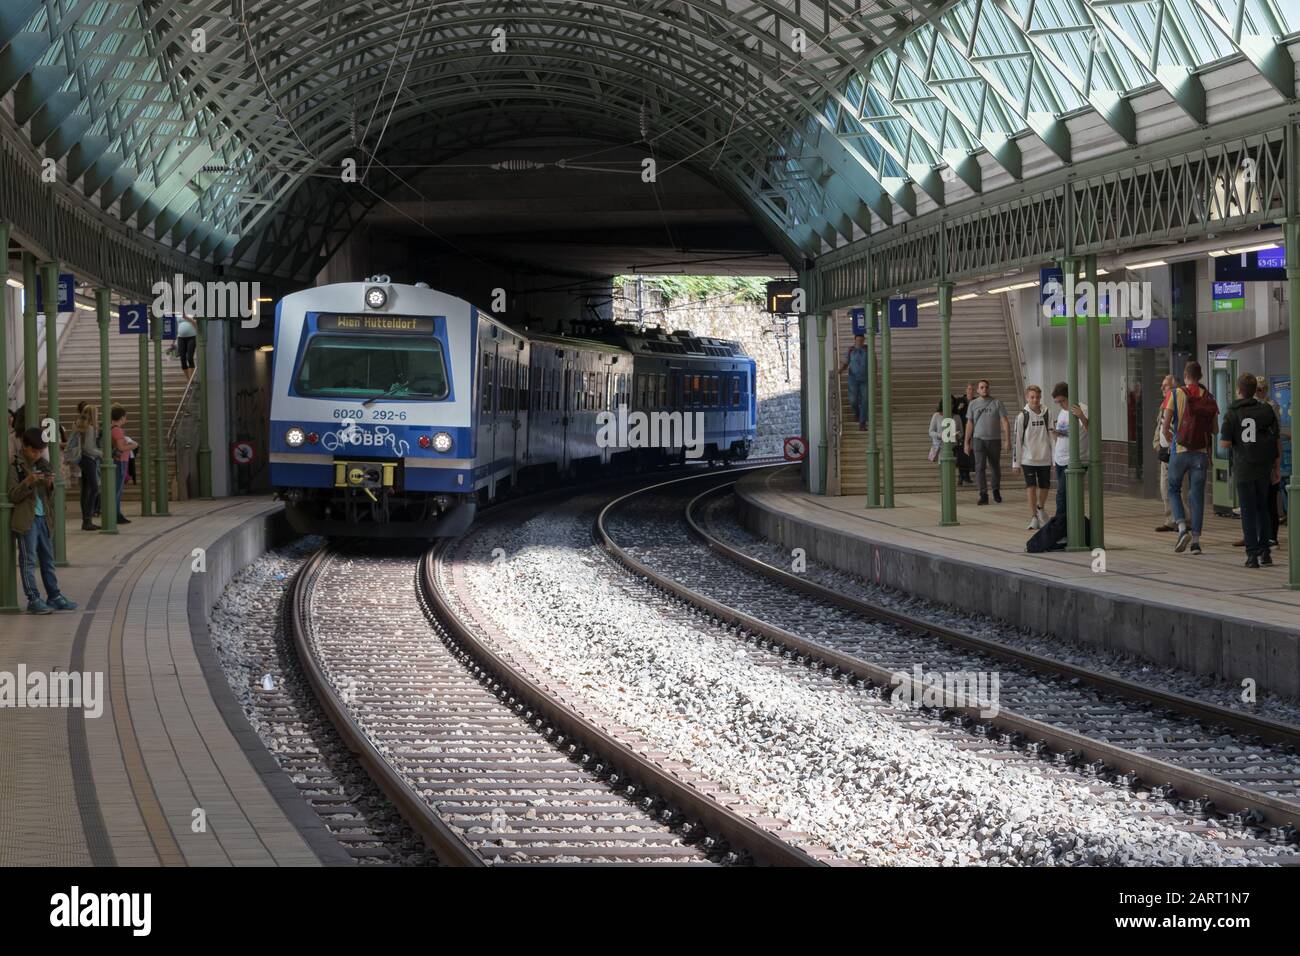 Vienna, Austria - September 3, 2019: People waiting at underground tube platform for train arrives Stock Photo